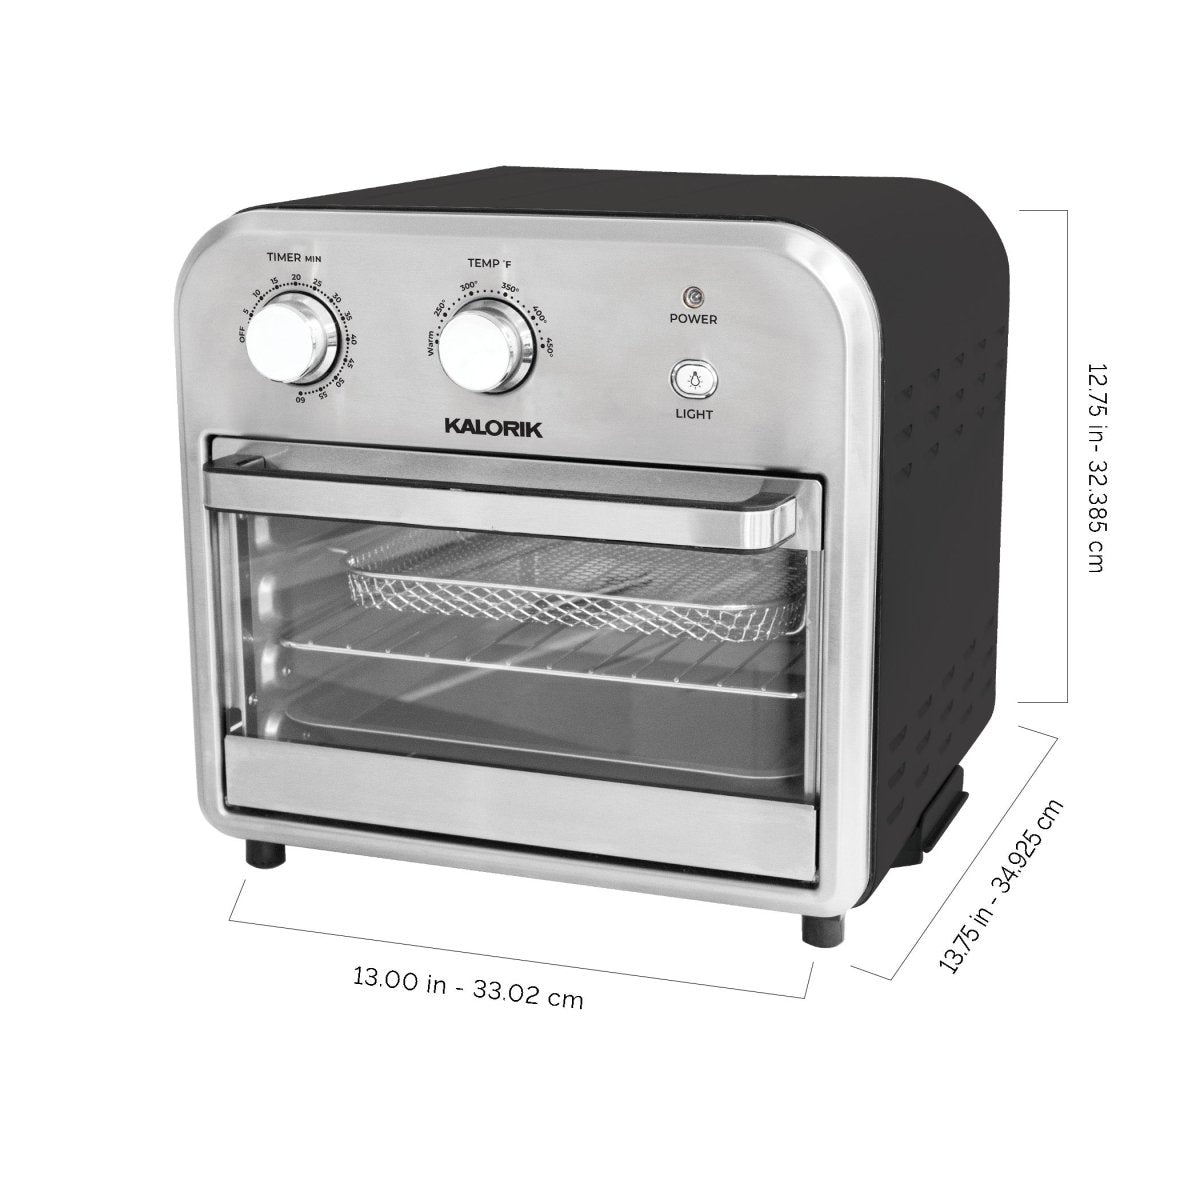 Kalorik 12 Quart Air Fryer Oven, Black and Stainless Steel